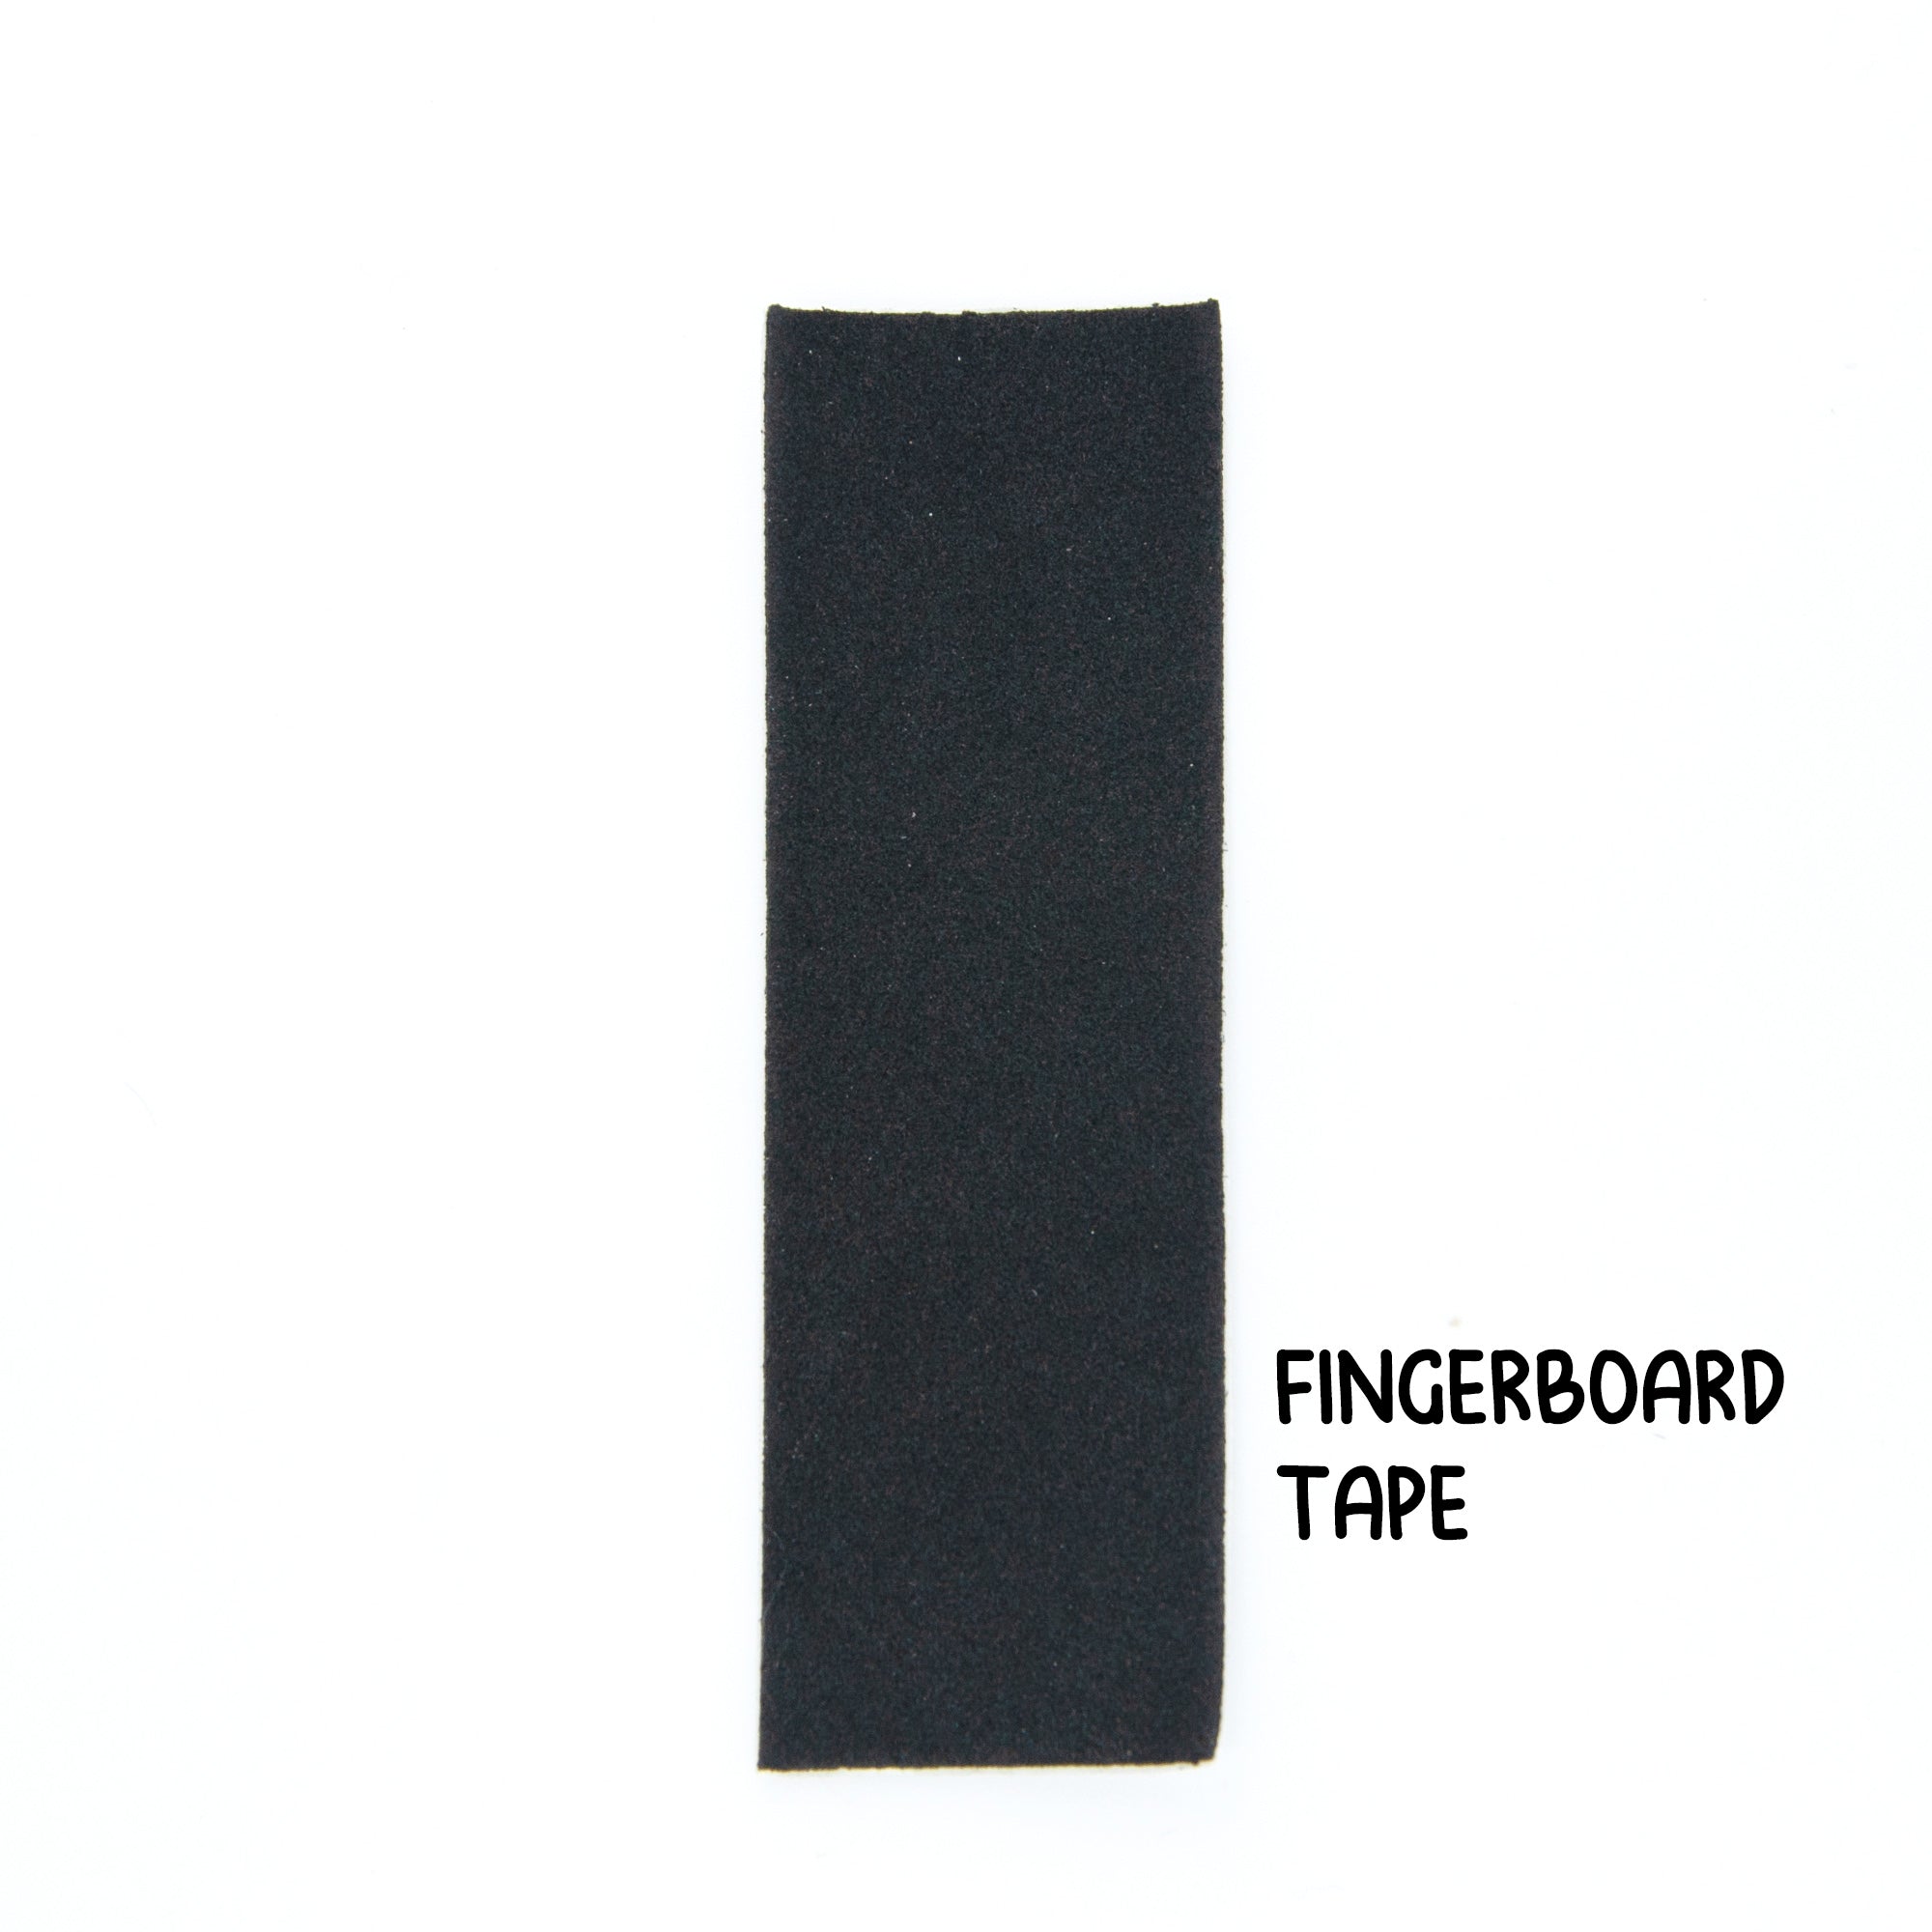 Real Wear Graphic Professional Fingerboard Deck - Fingerboard Tape